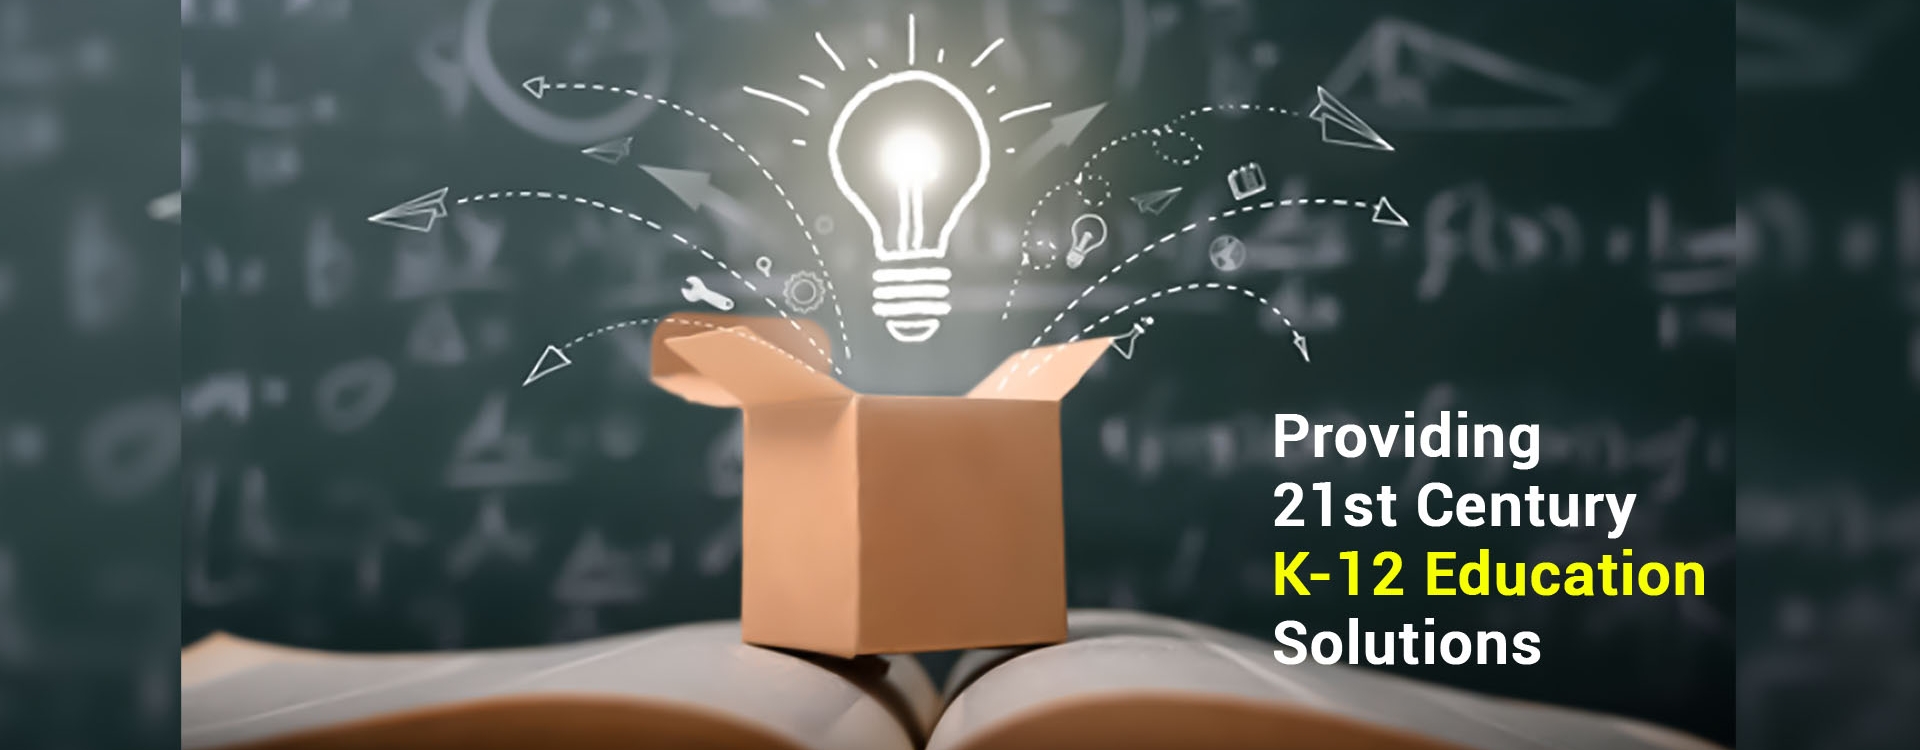 K-12 Education Solutions - Kalorex